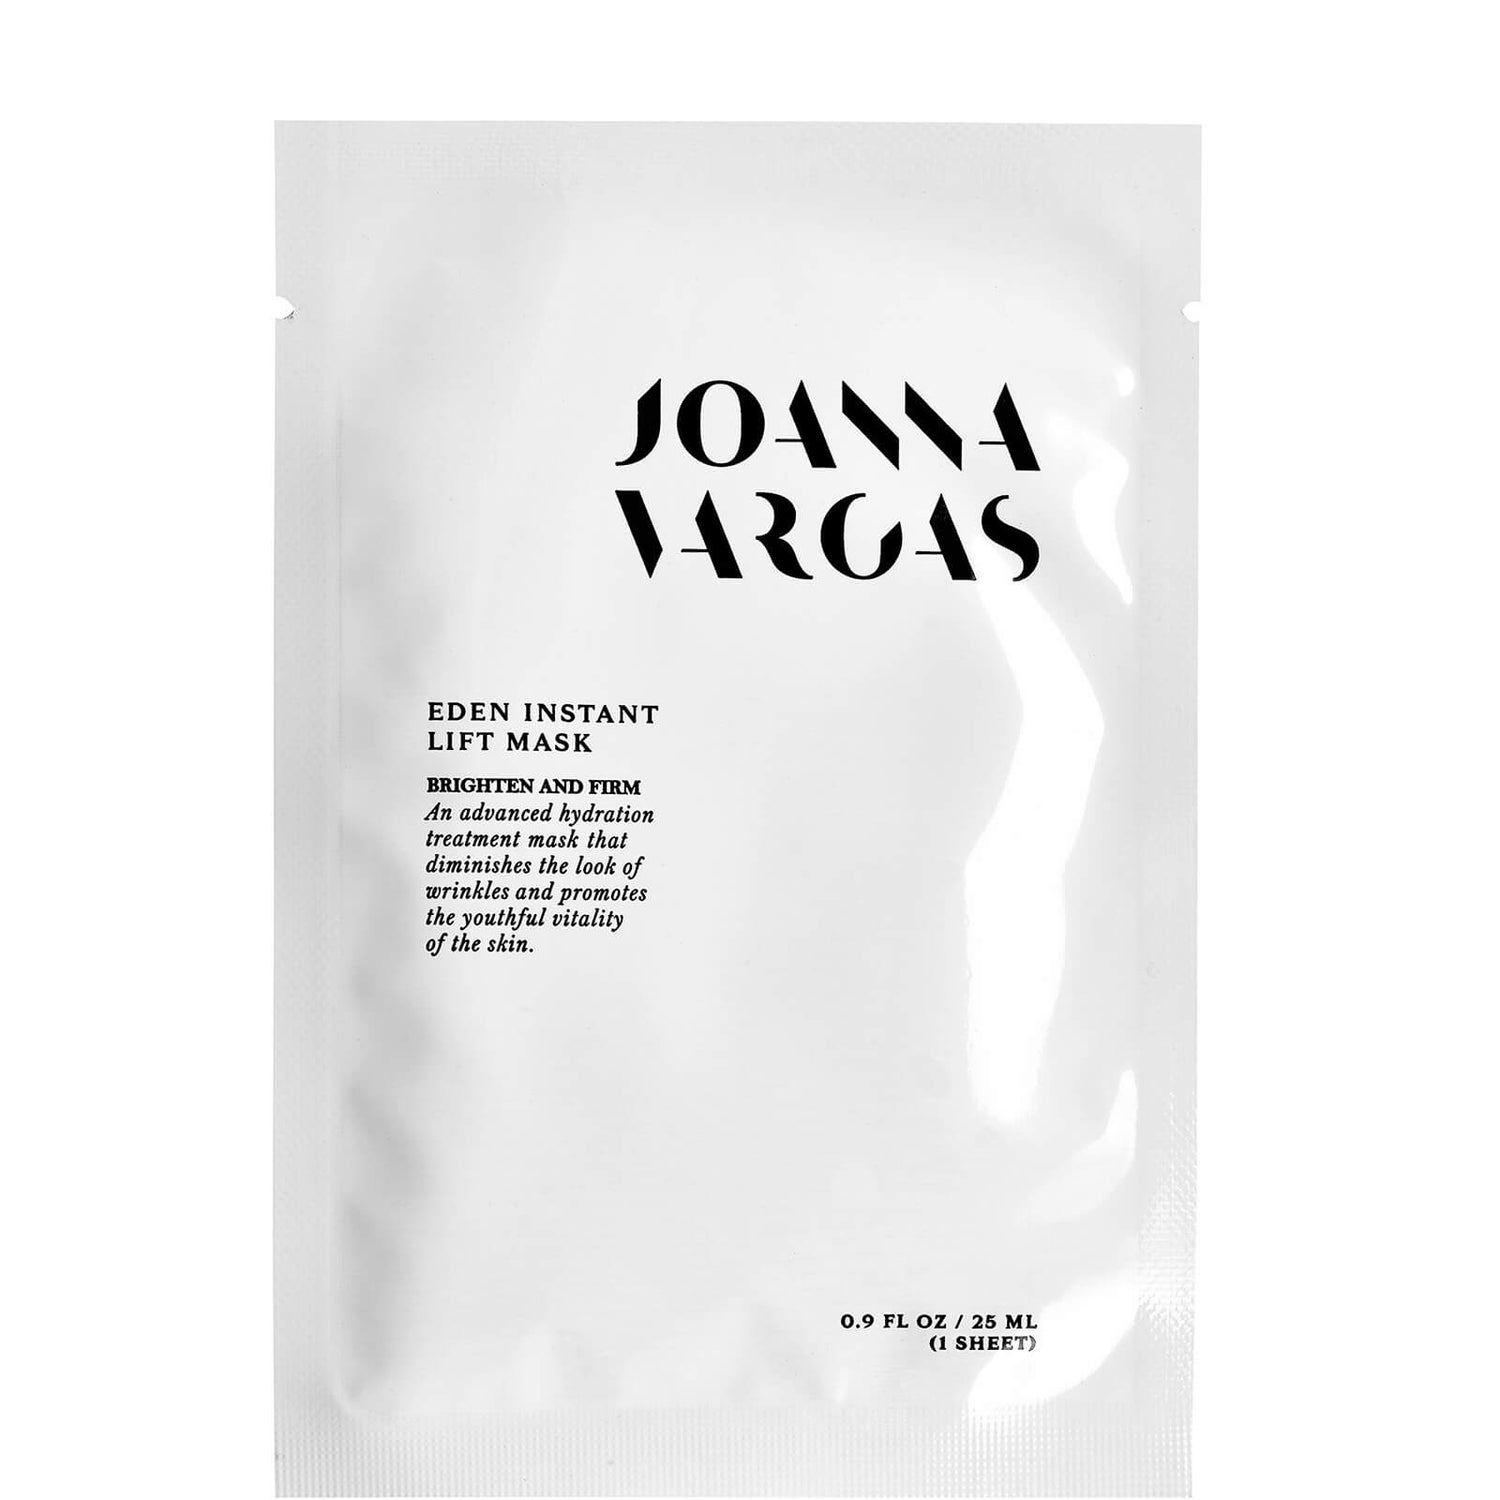 Joanna Vargas Eden Instant Lift Mask (4.5 fl. oz.)